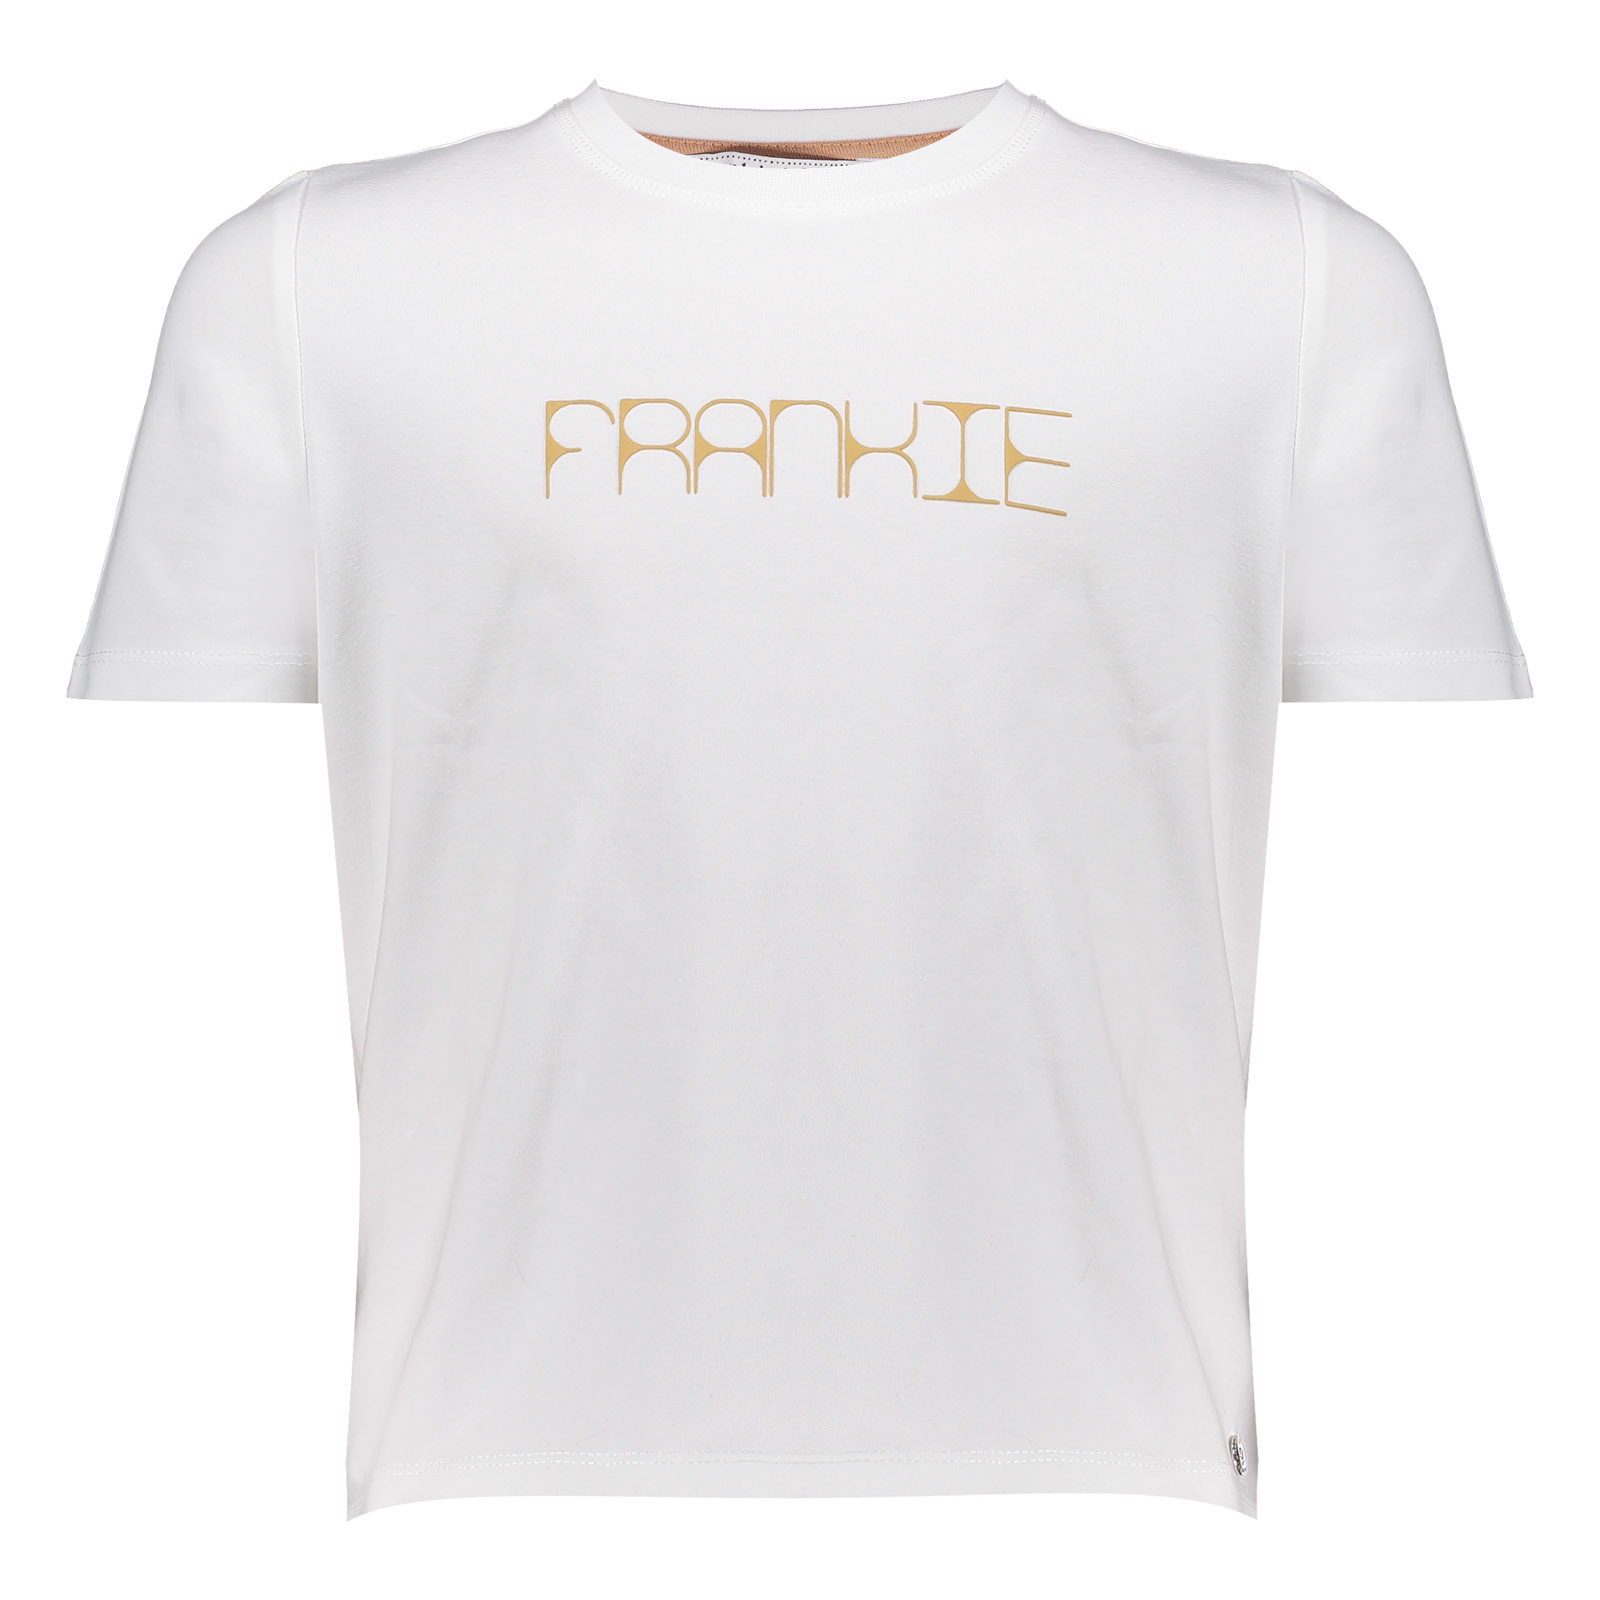 Frankie & Liberty Meisjes t-shirt - Hailey - Pure wit